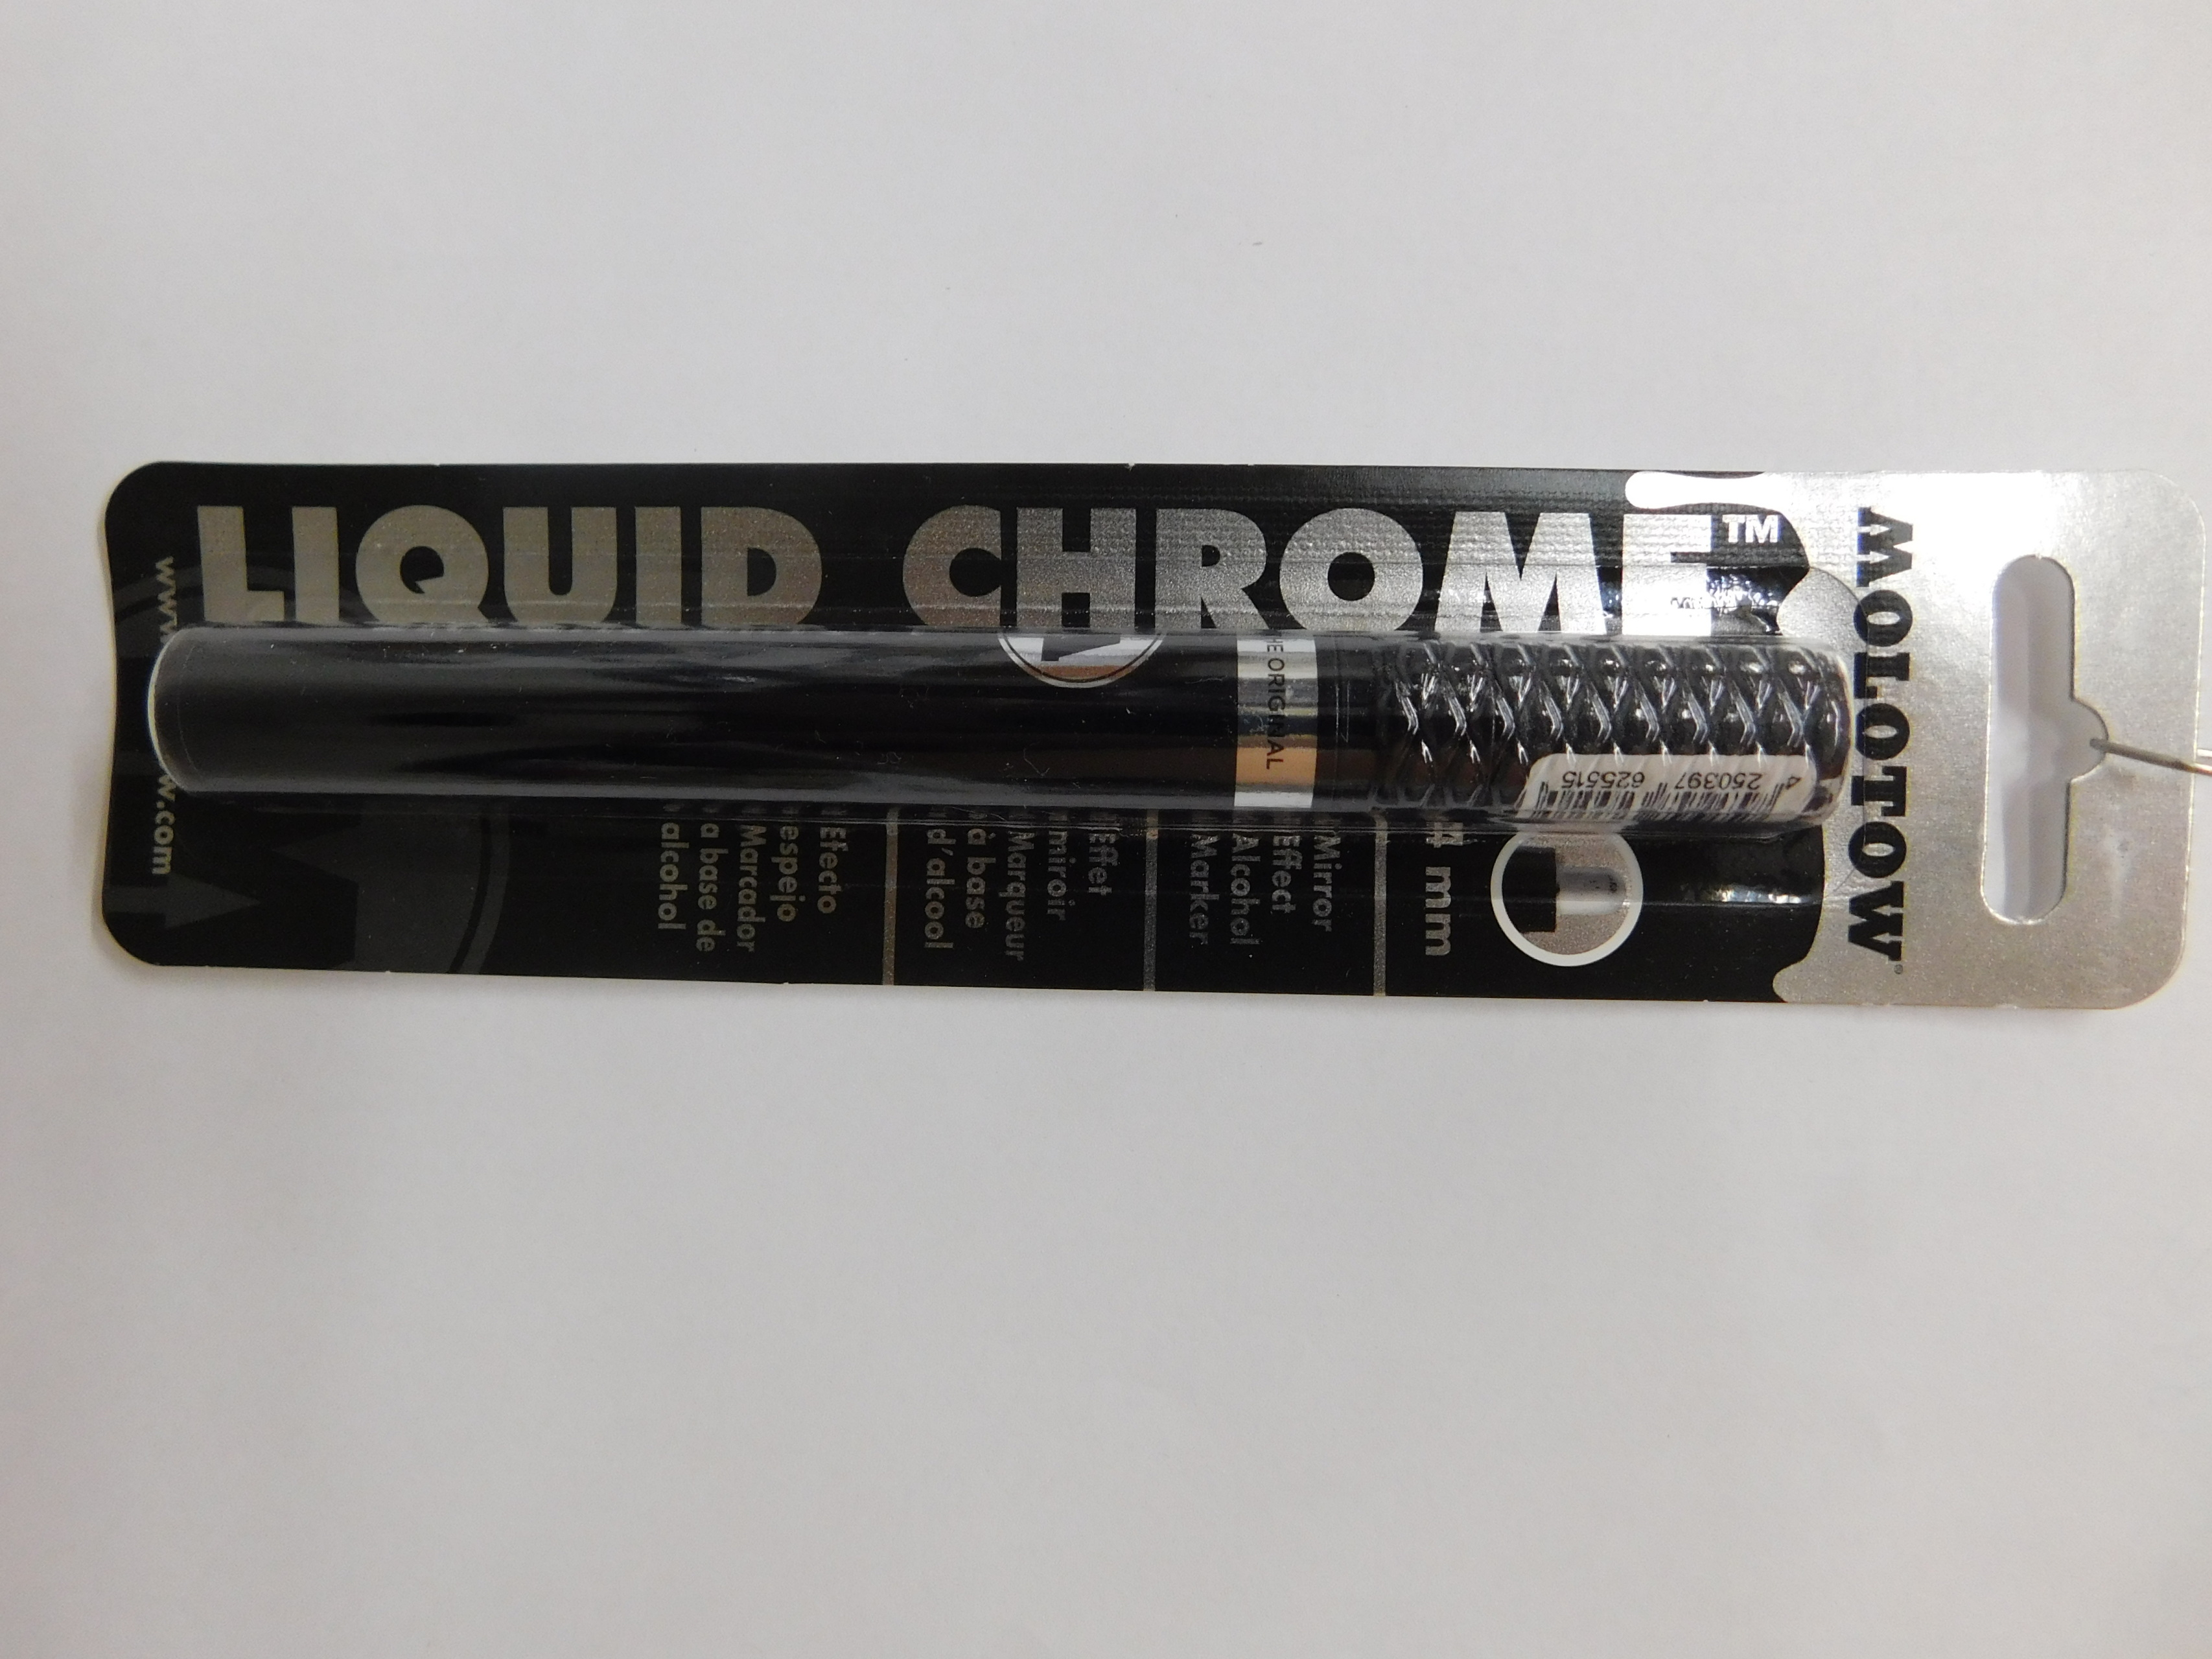 Molotow - Liquid Chrome Marker - 4mm Tip